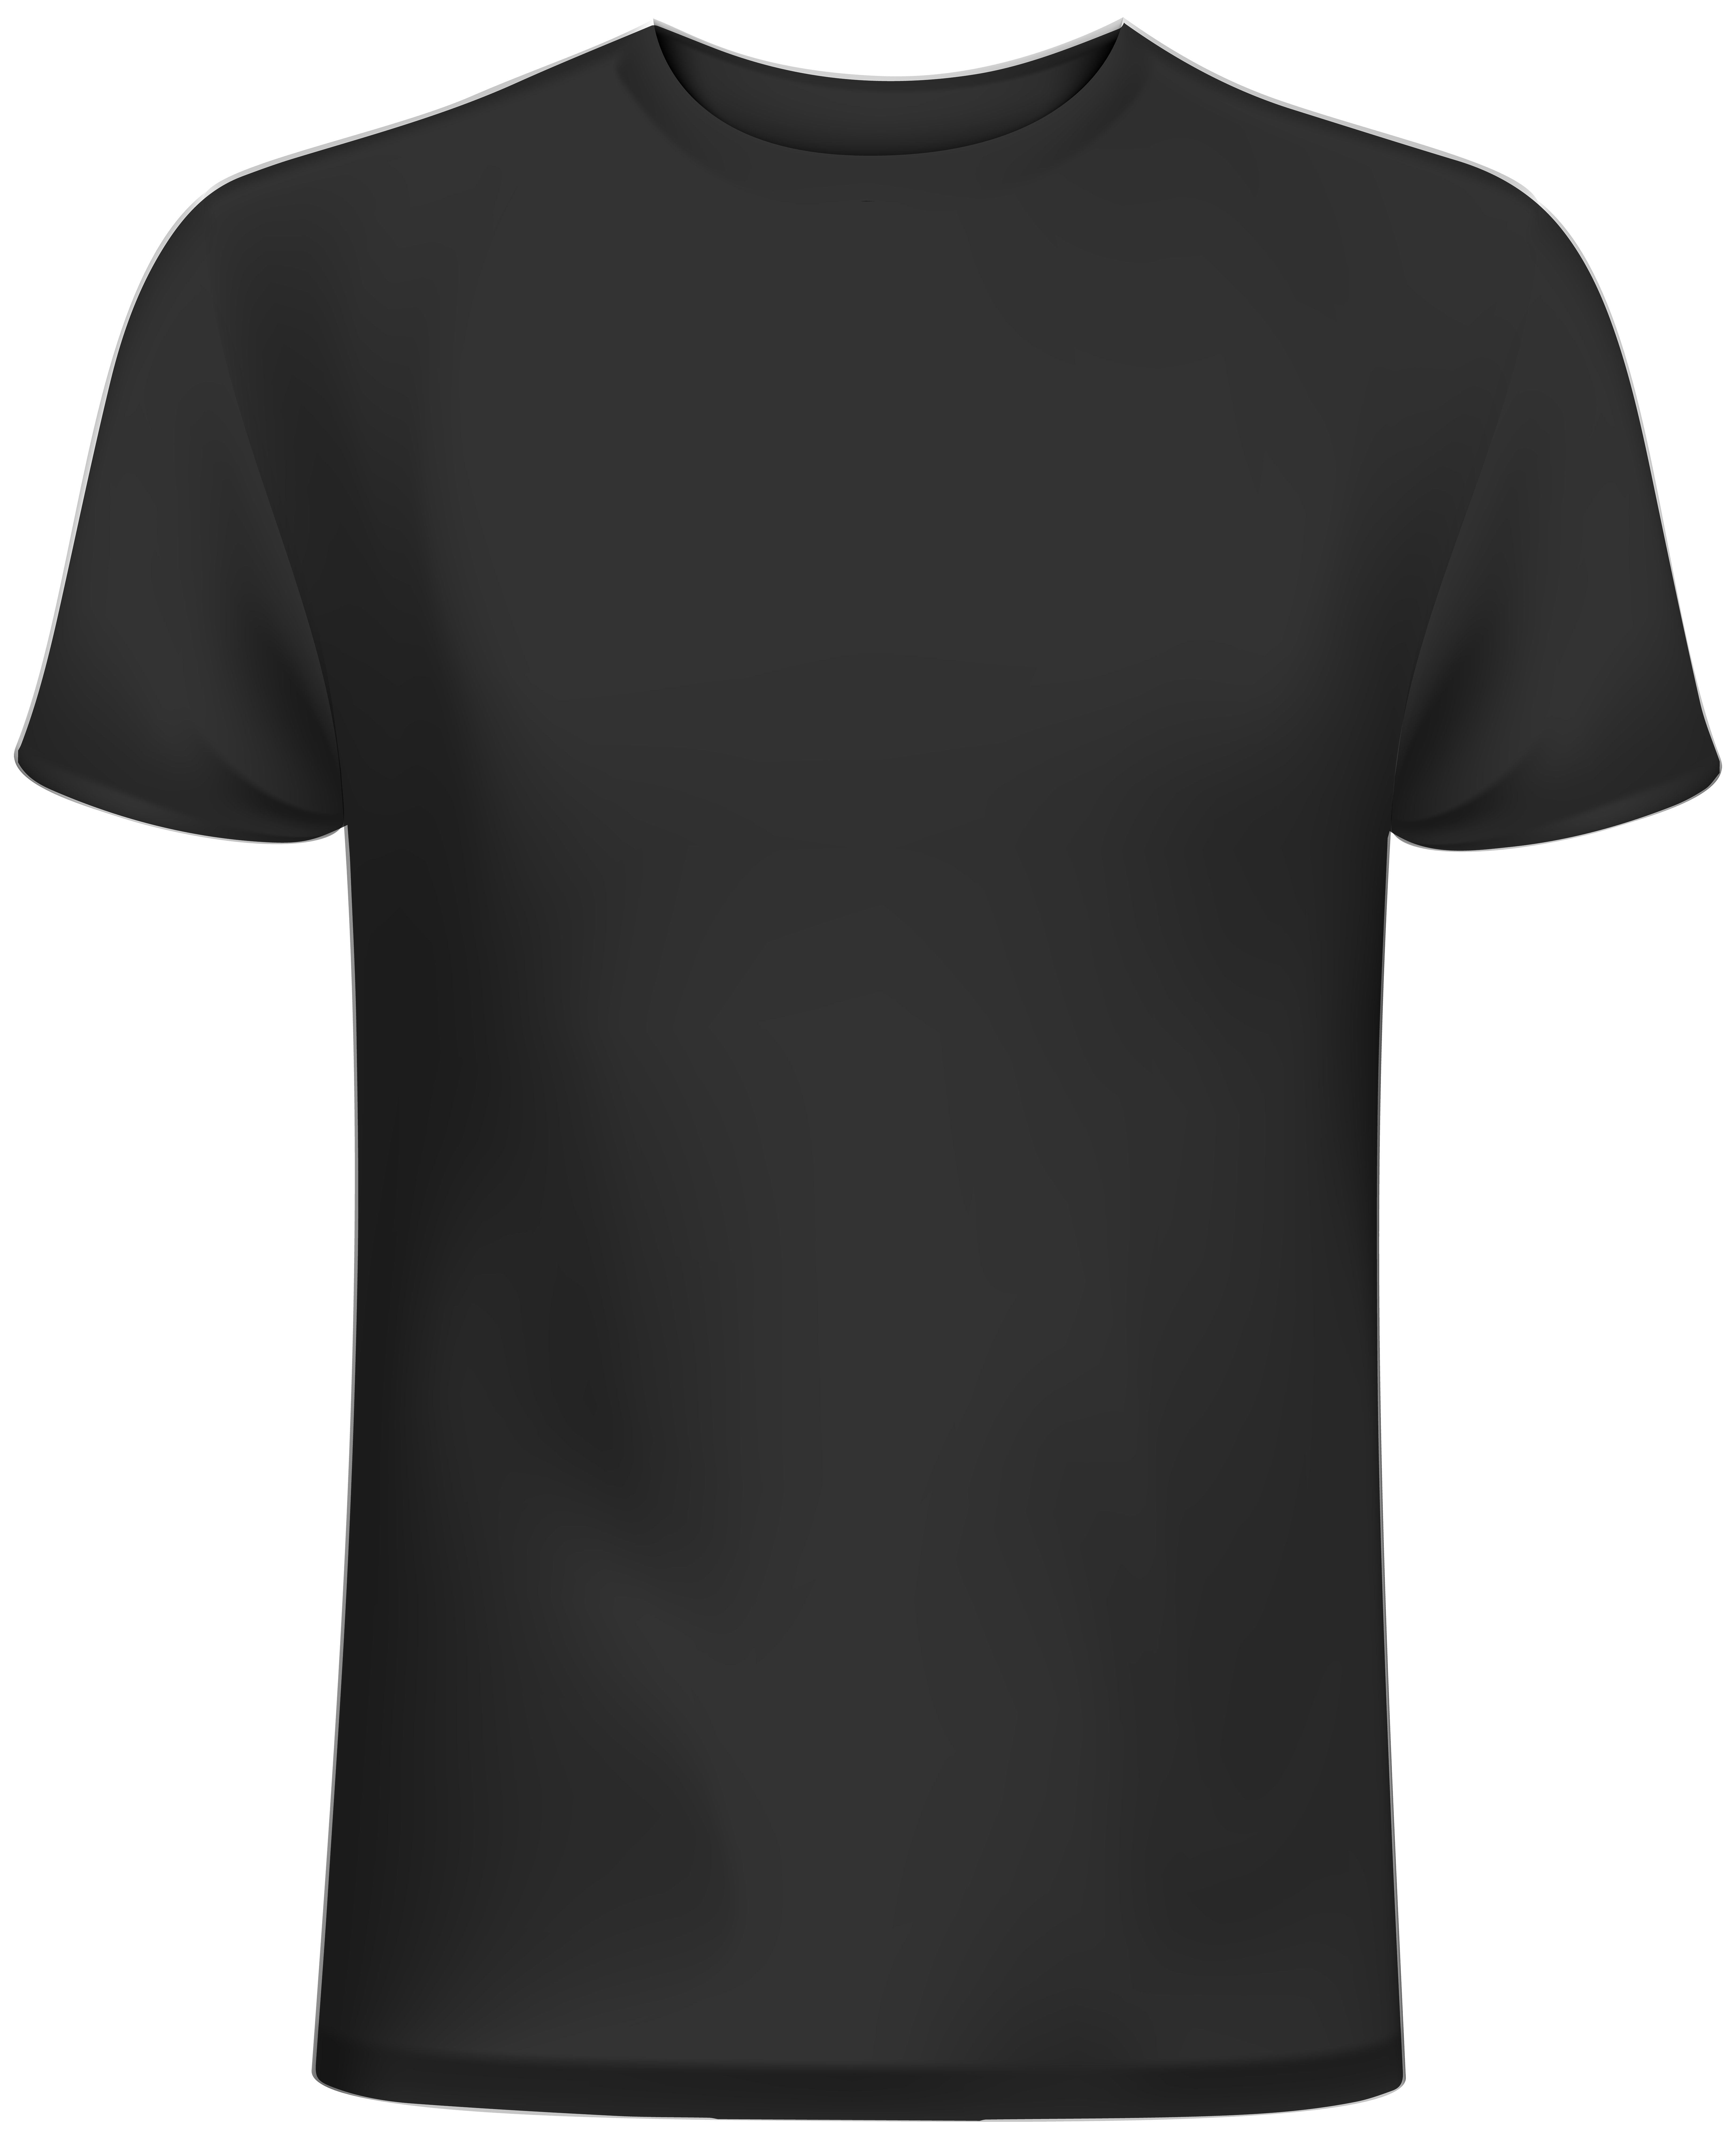 2195+ Transparent Blank T Shirt Mockup File Best Free